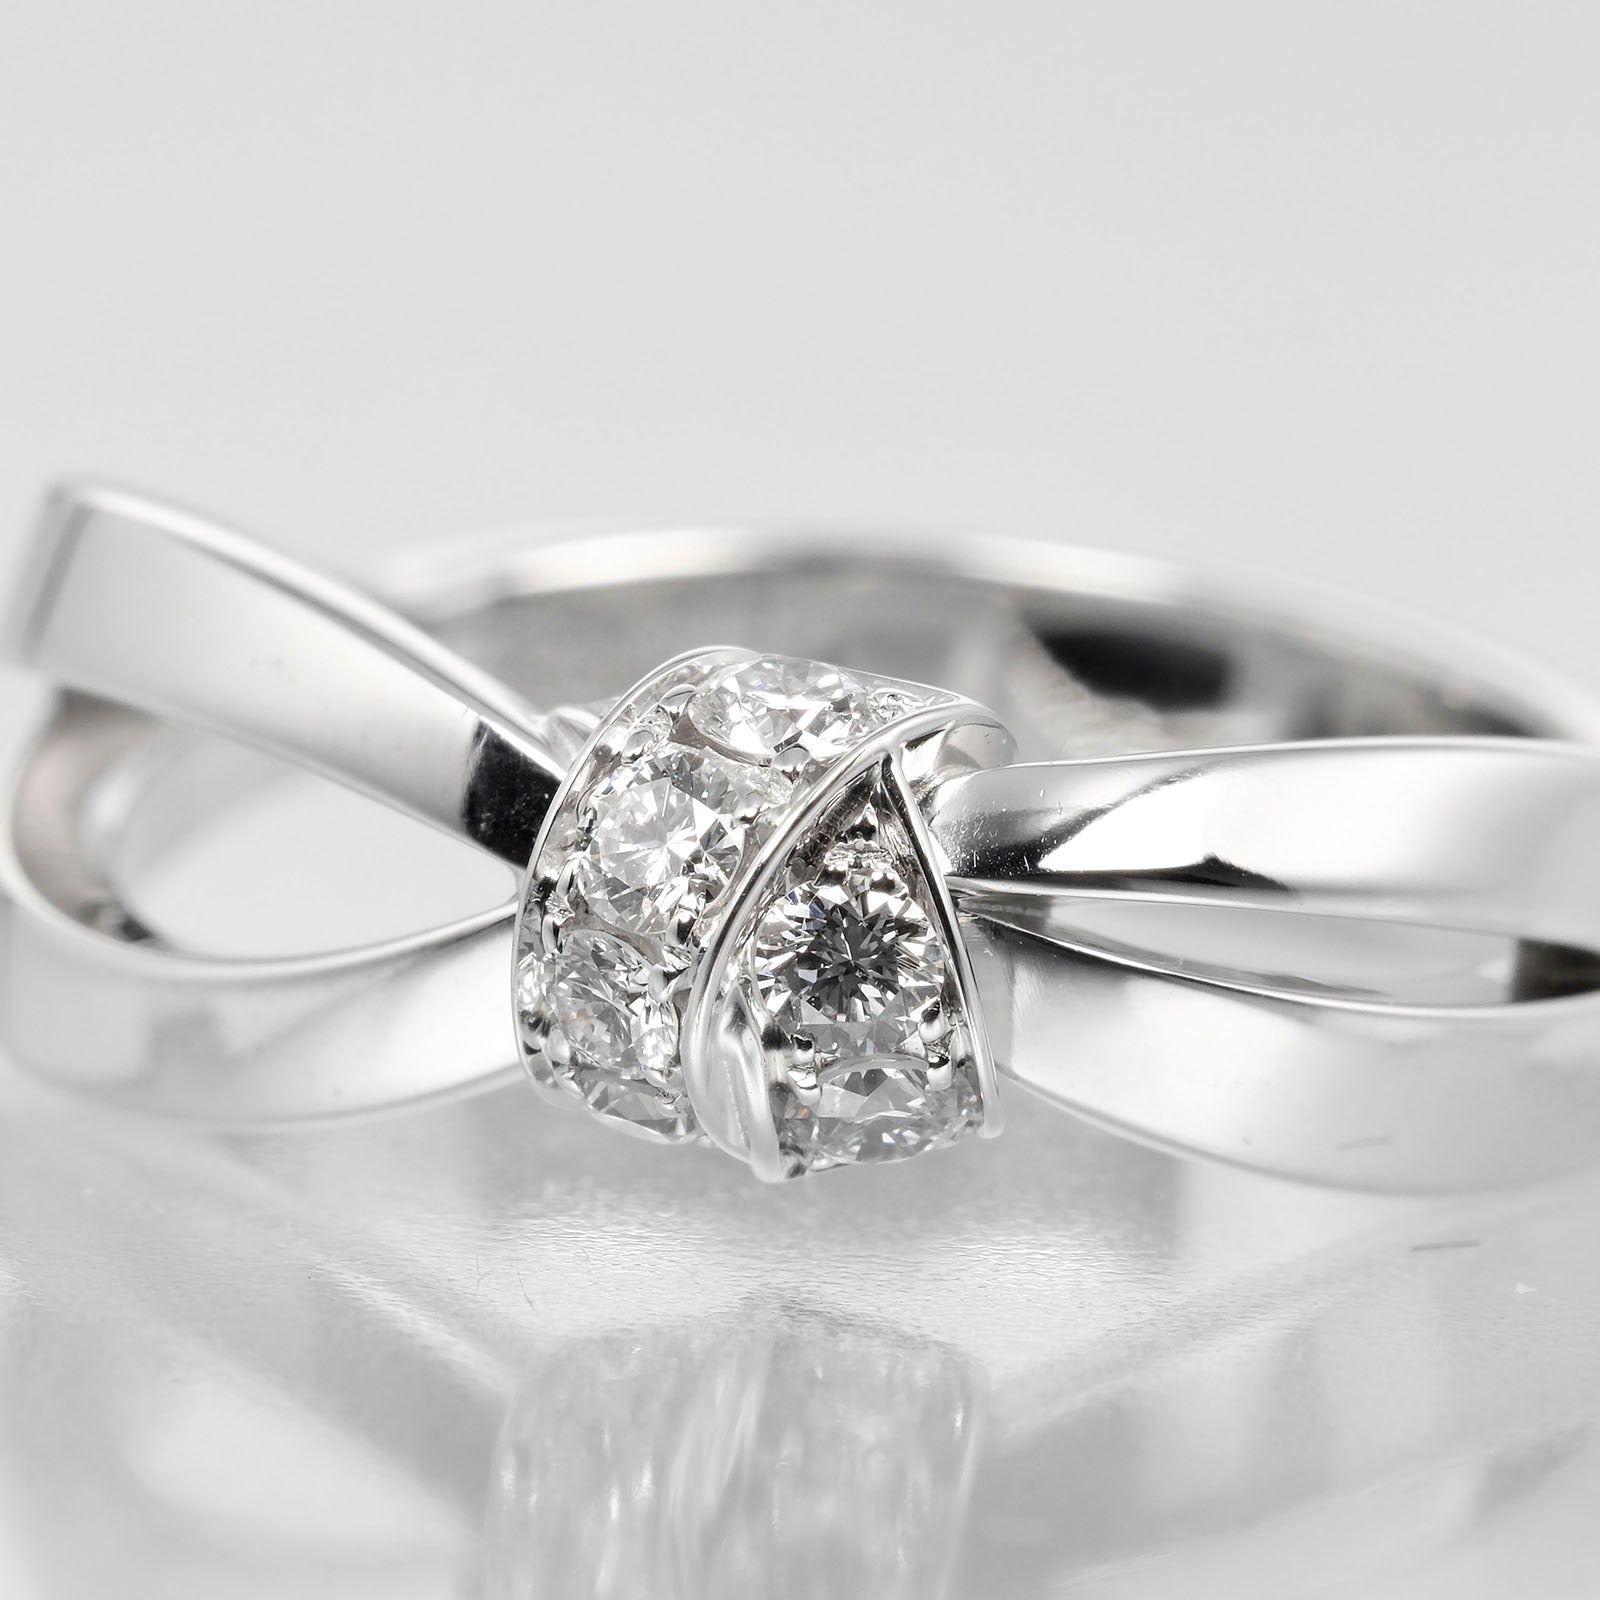 Chaumet Lian Seduction 13.5 Ring Ring K18 WG White G Diamond  5.7g A